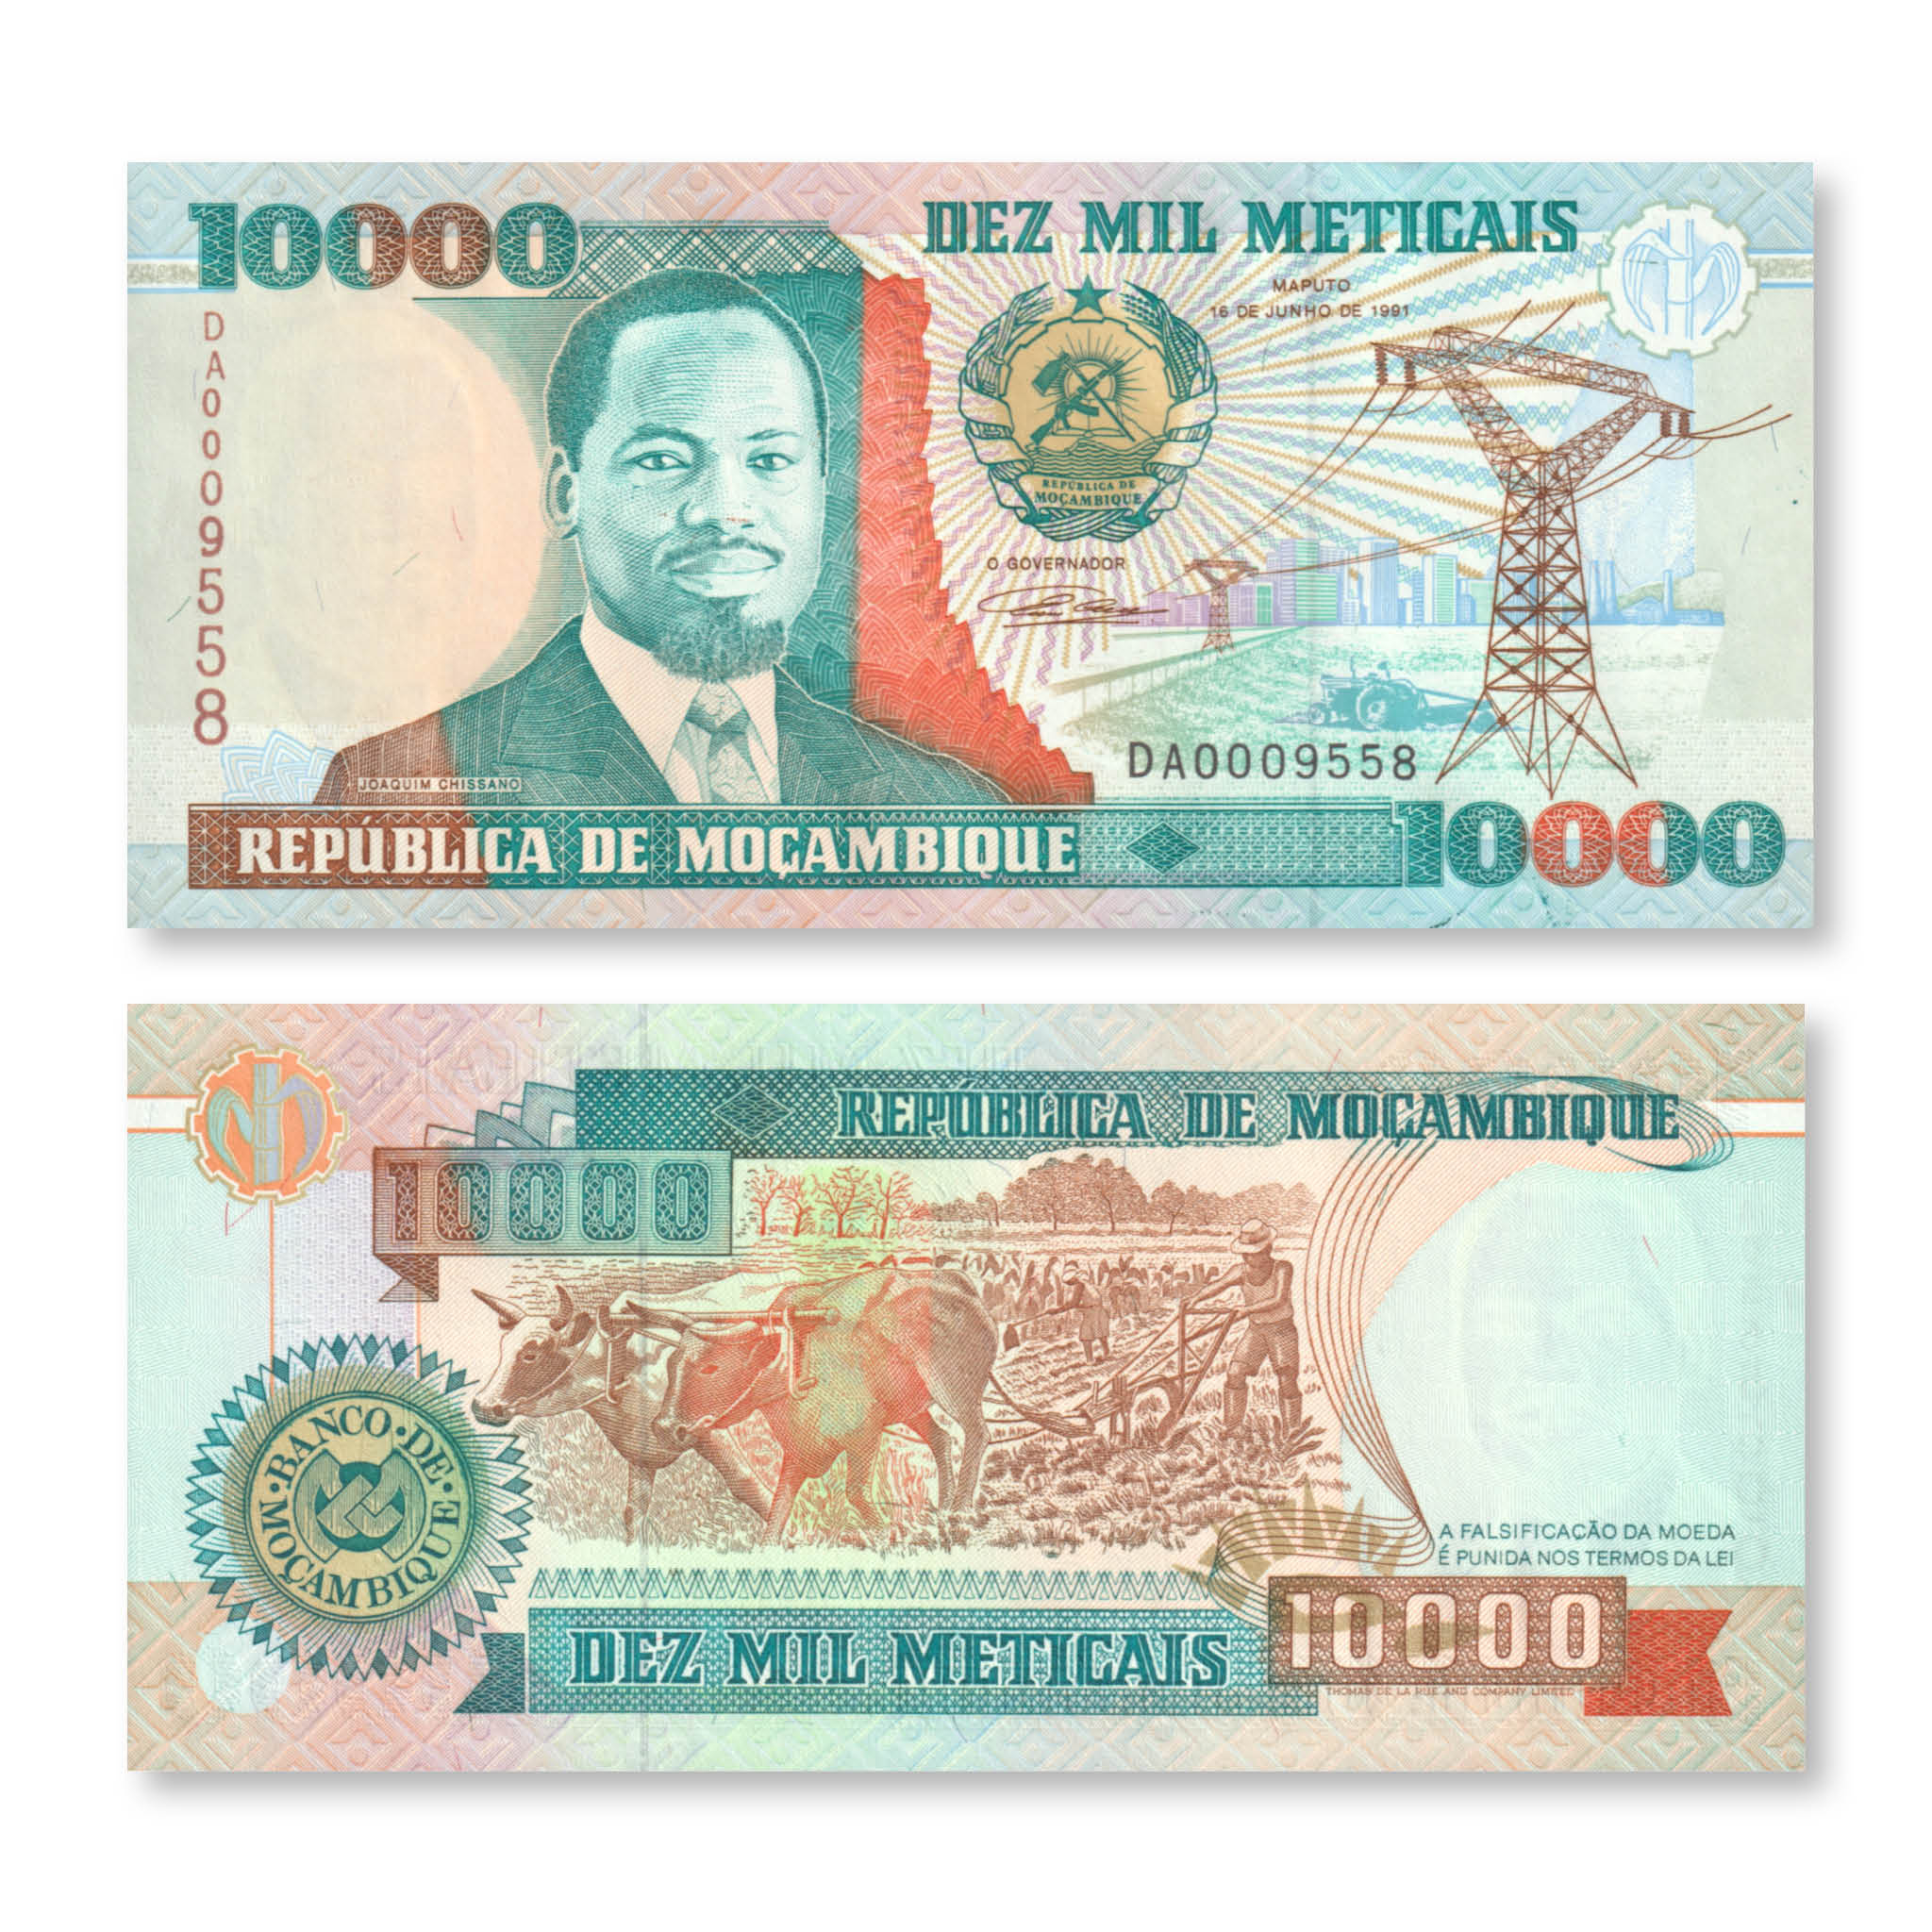 Mozambique 10,000 Meticais, 1991, B222a, P137, UNC - Robert's World Money - World Banknotes